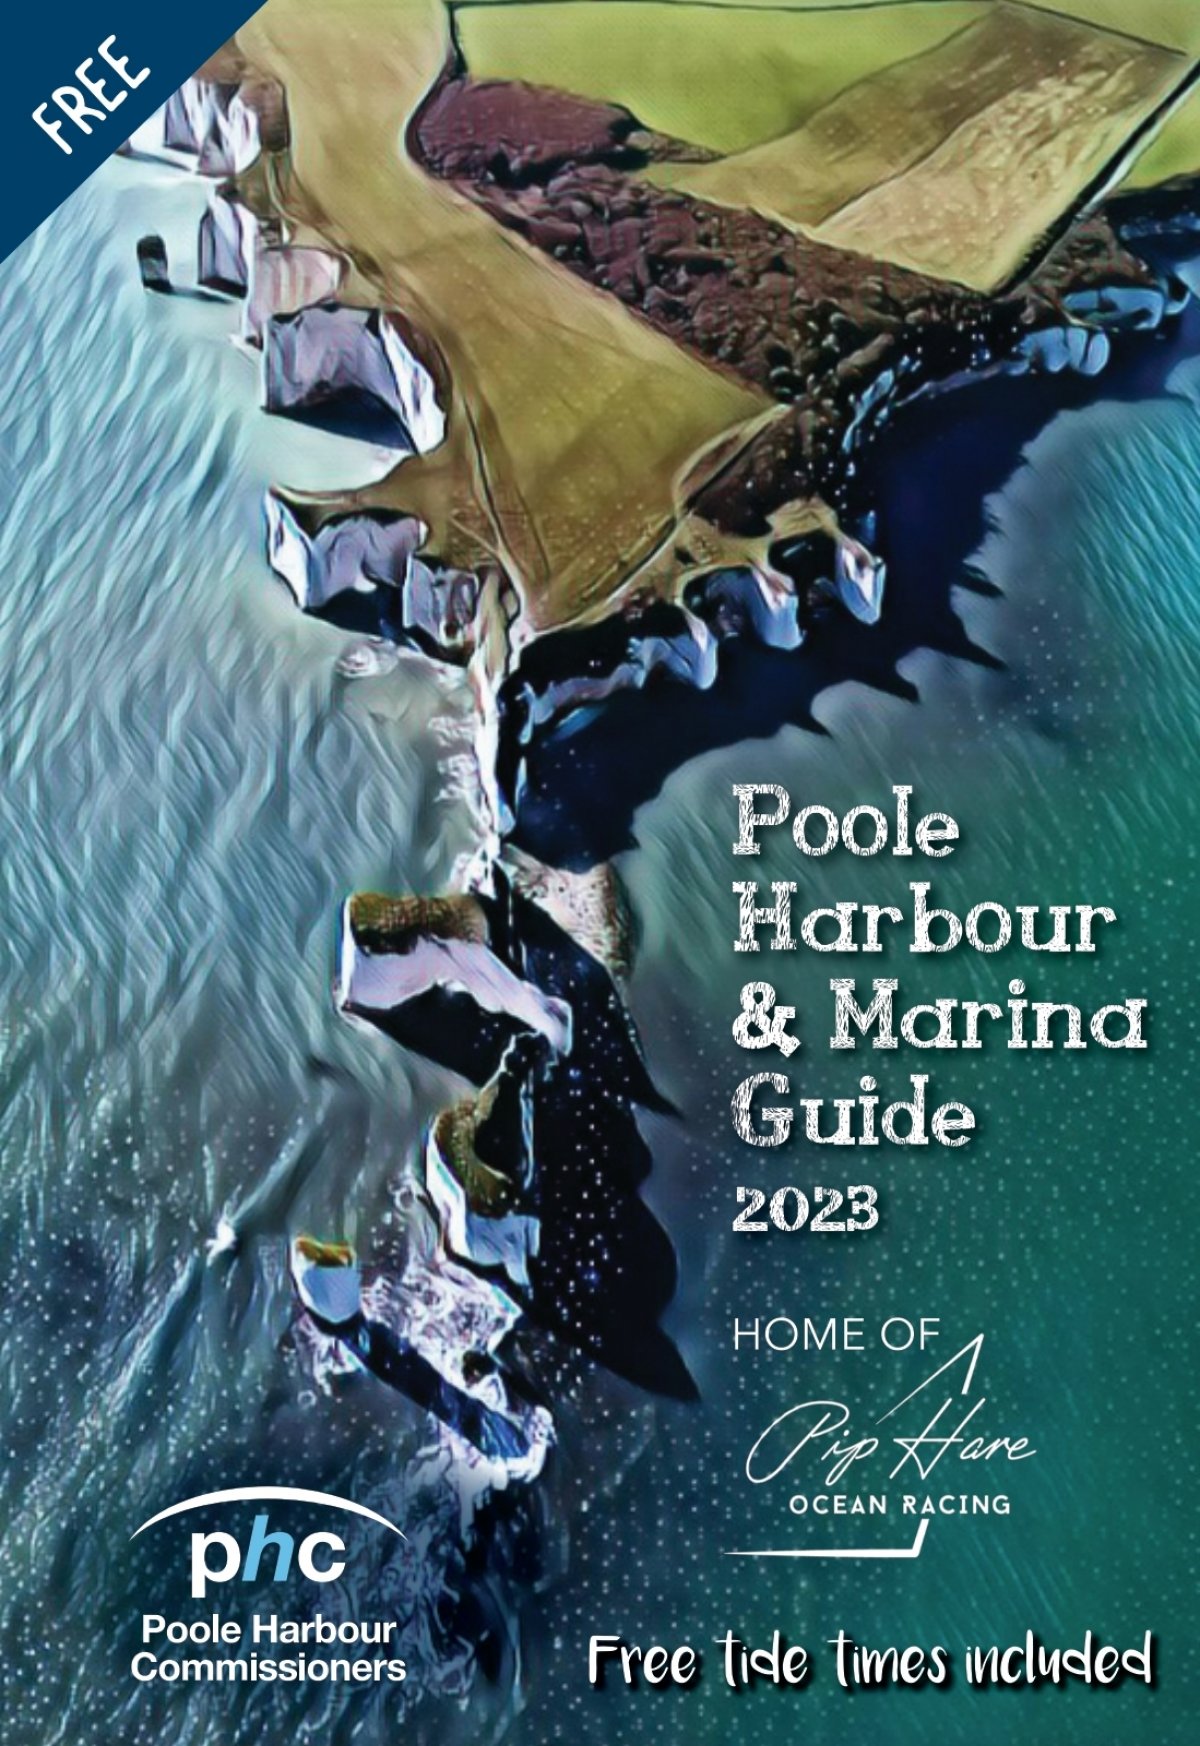 PQBH Marina Guide 2023 flipbook version